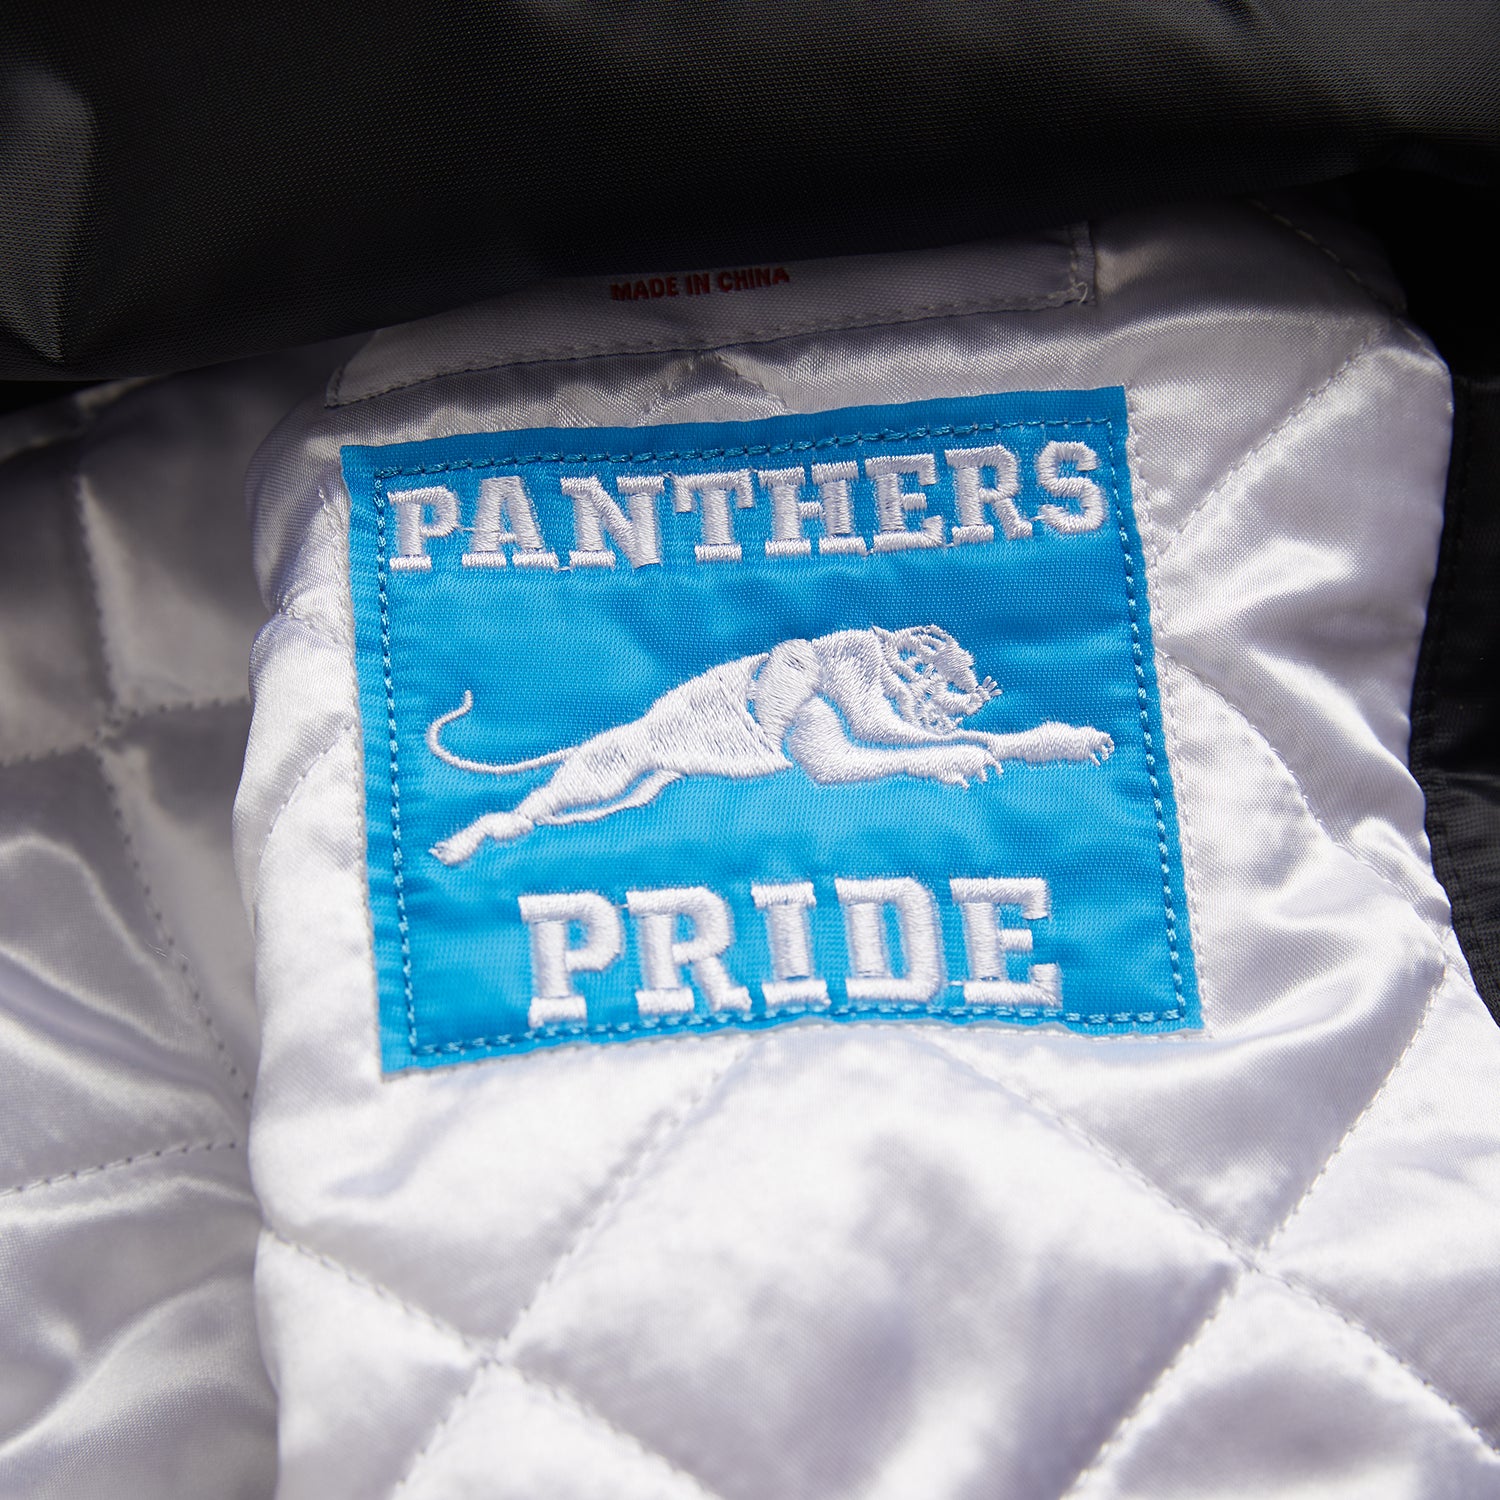 Maker of Jacket NFL Carolina Panthers Satin Black and Blue Varsity